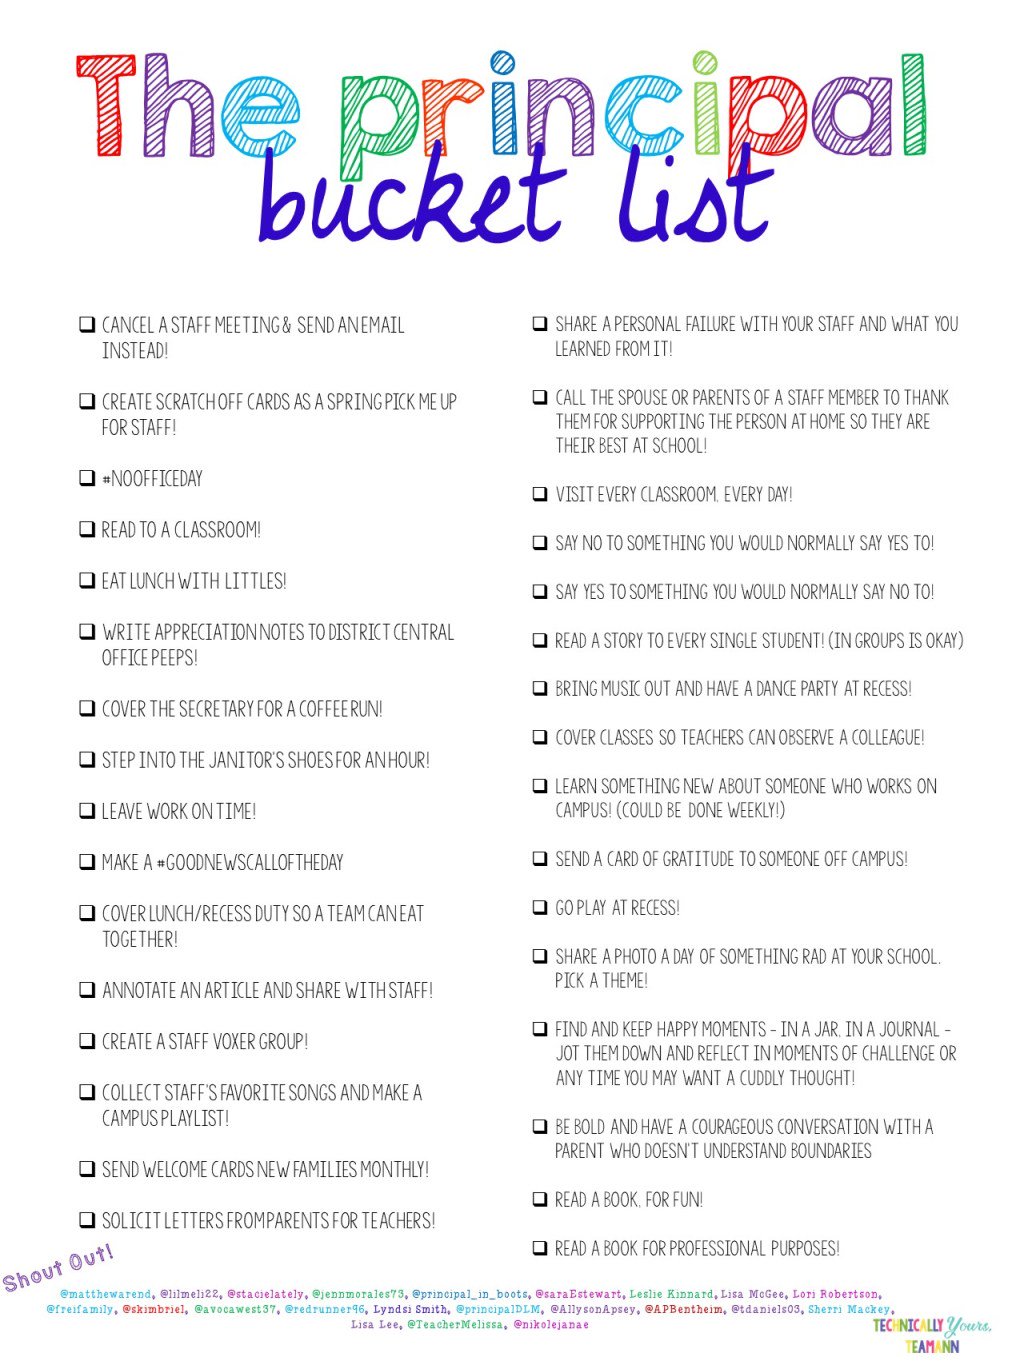 Amber Teamann on Twitter "a Principal’s Bucket List…great